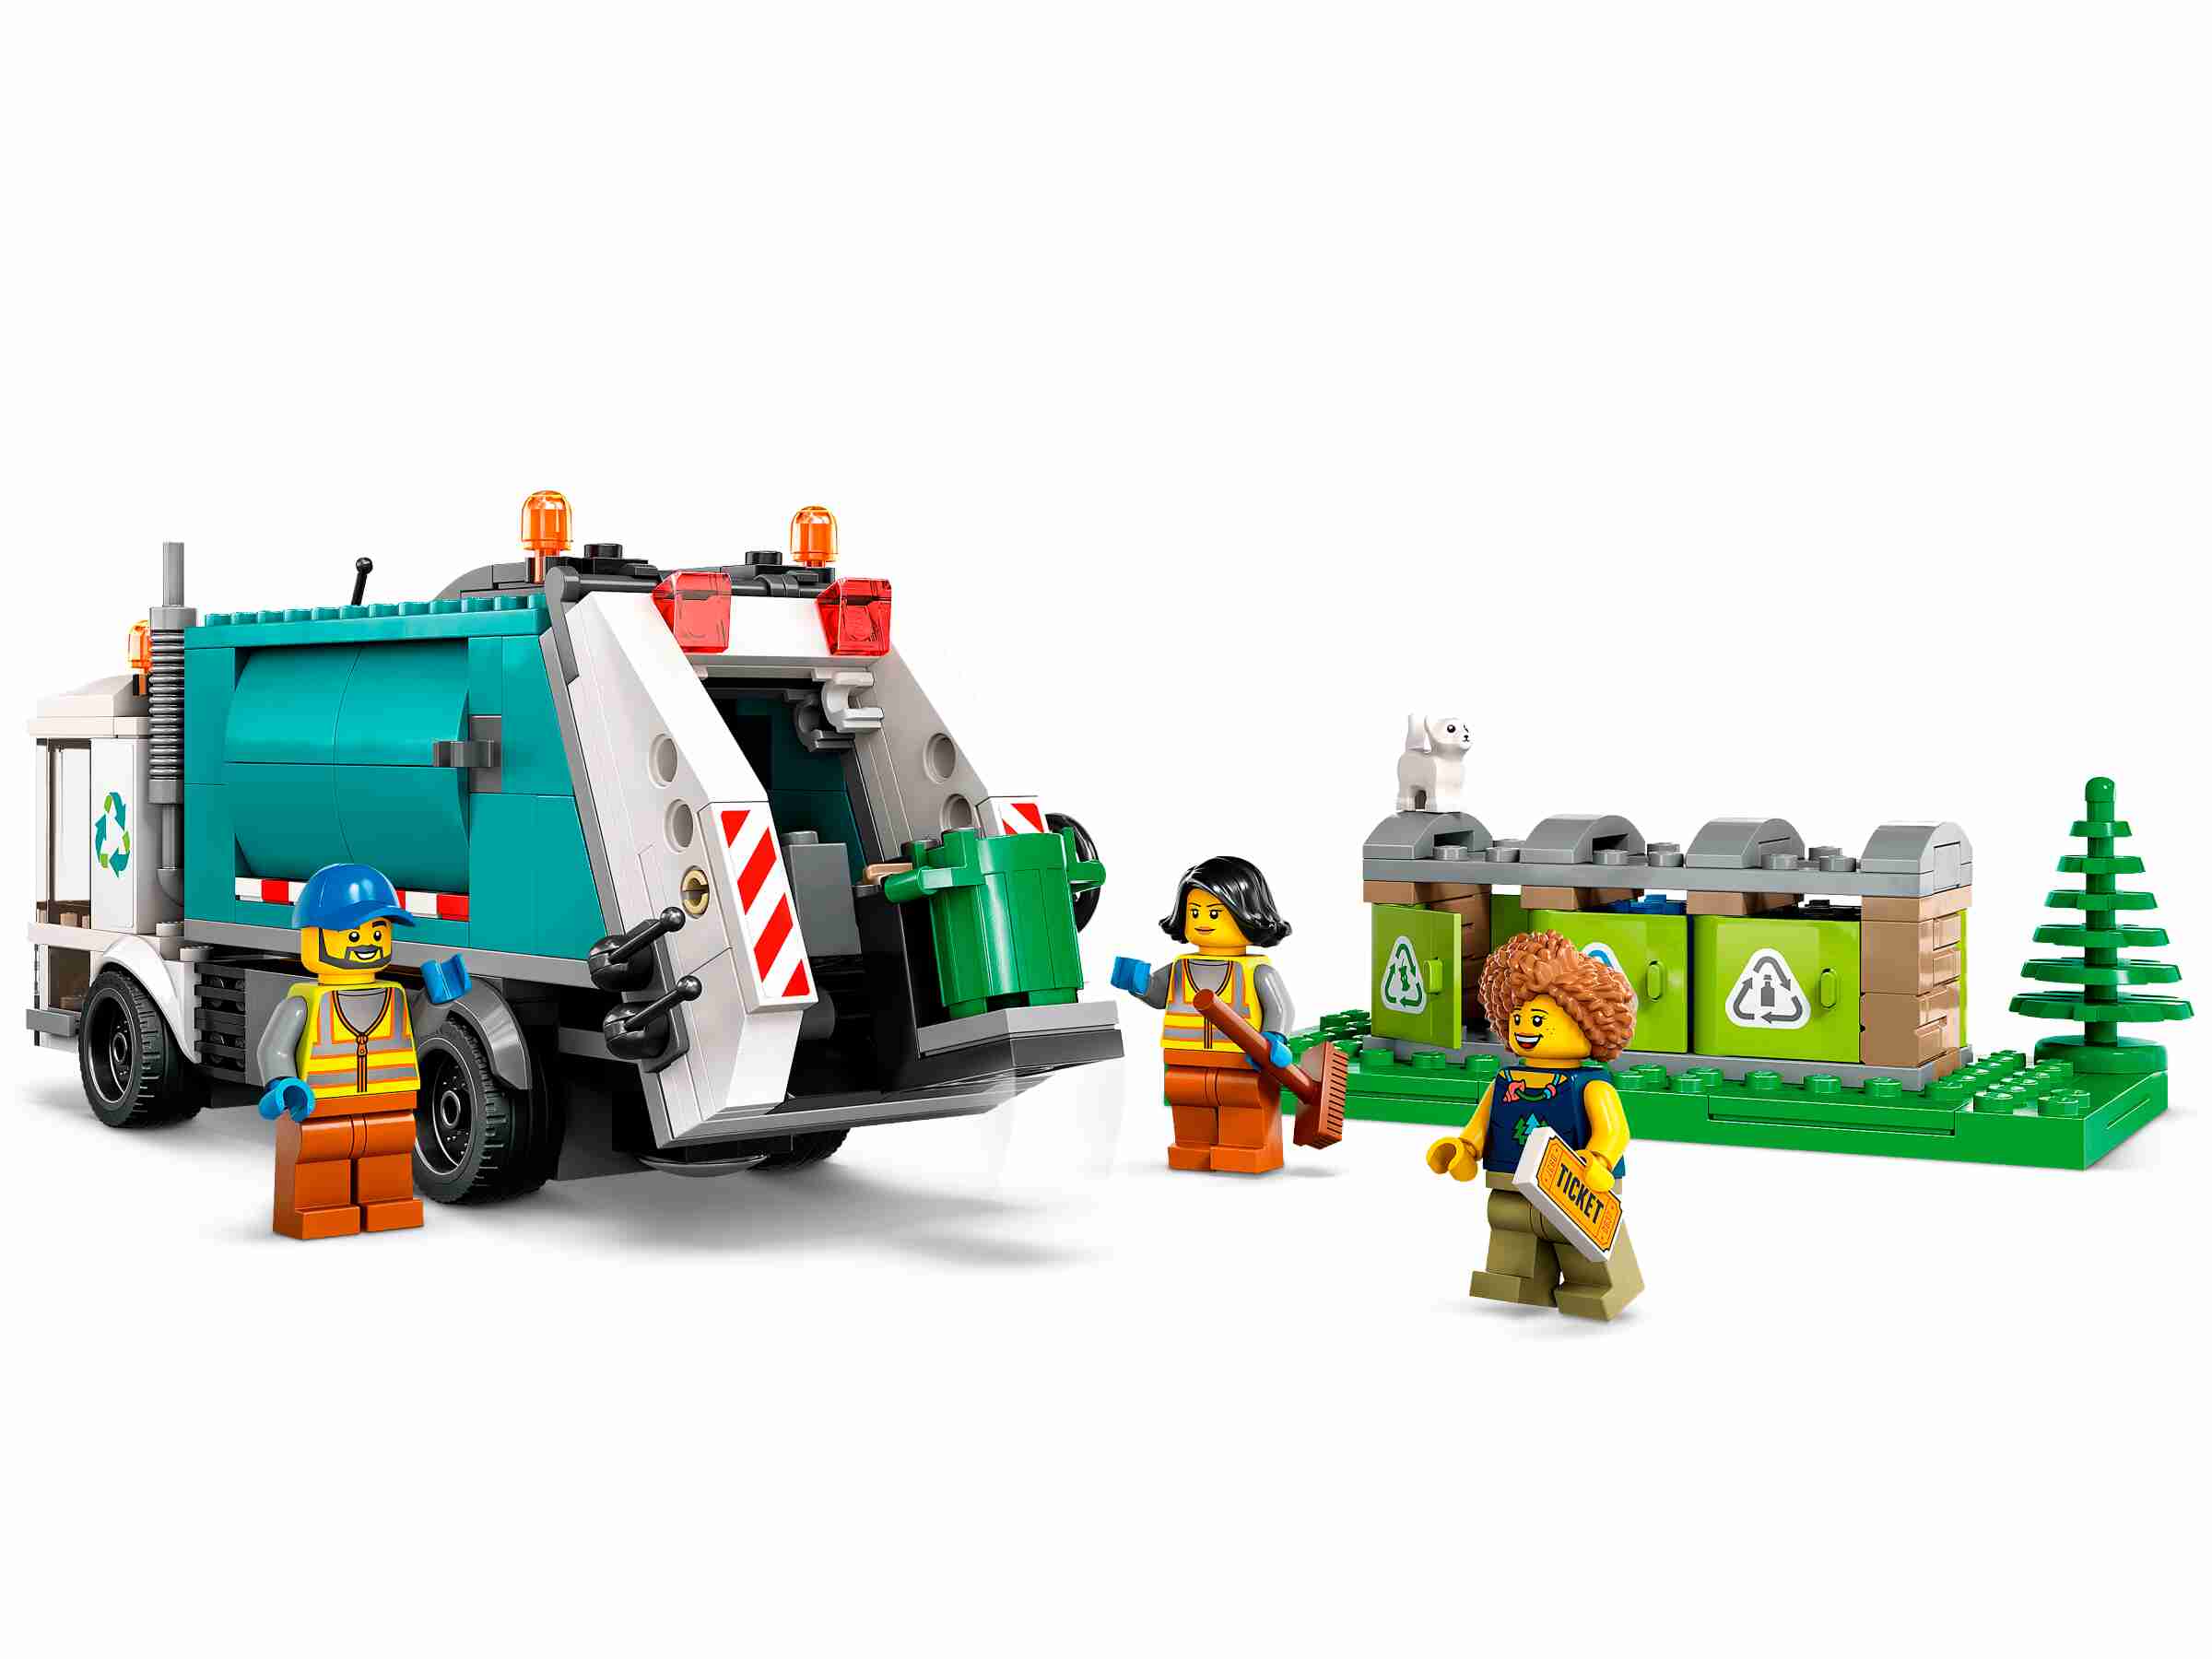 LEGO 60386 City Müllabfuhr, kippbare Plattform, 3 Minifiguren, Starke Fahrzeuge